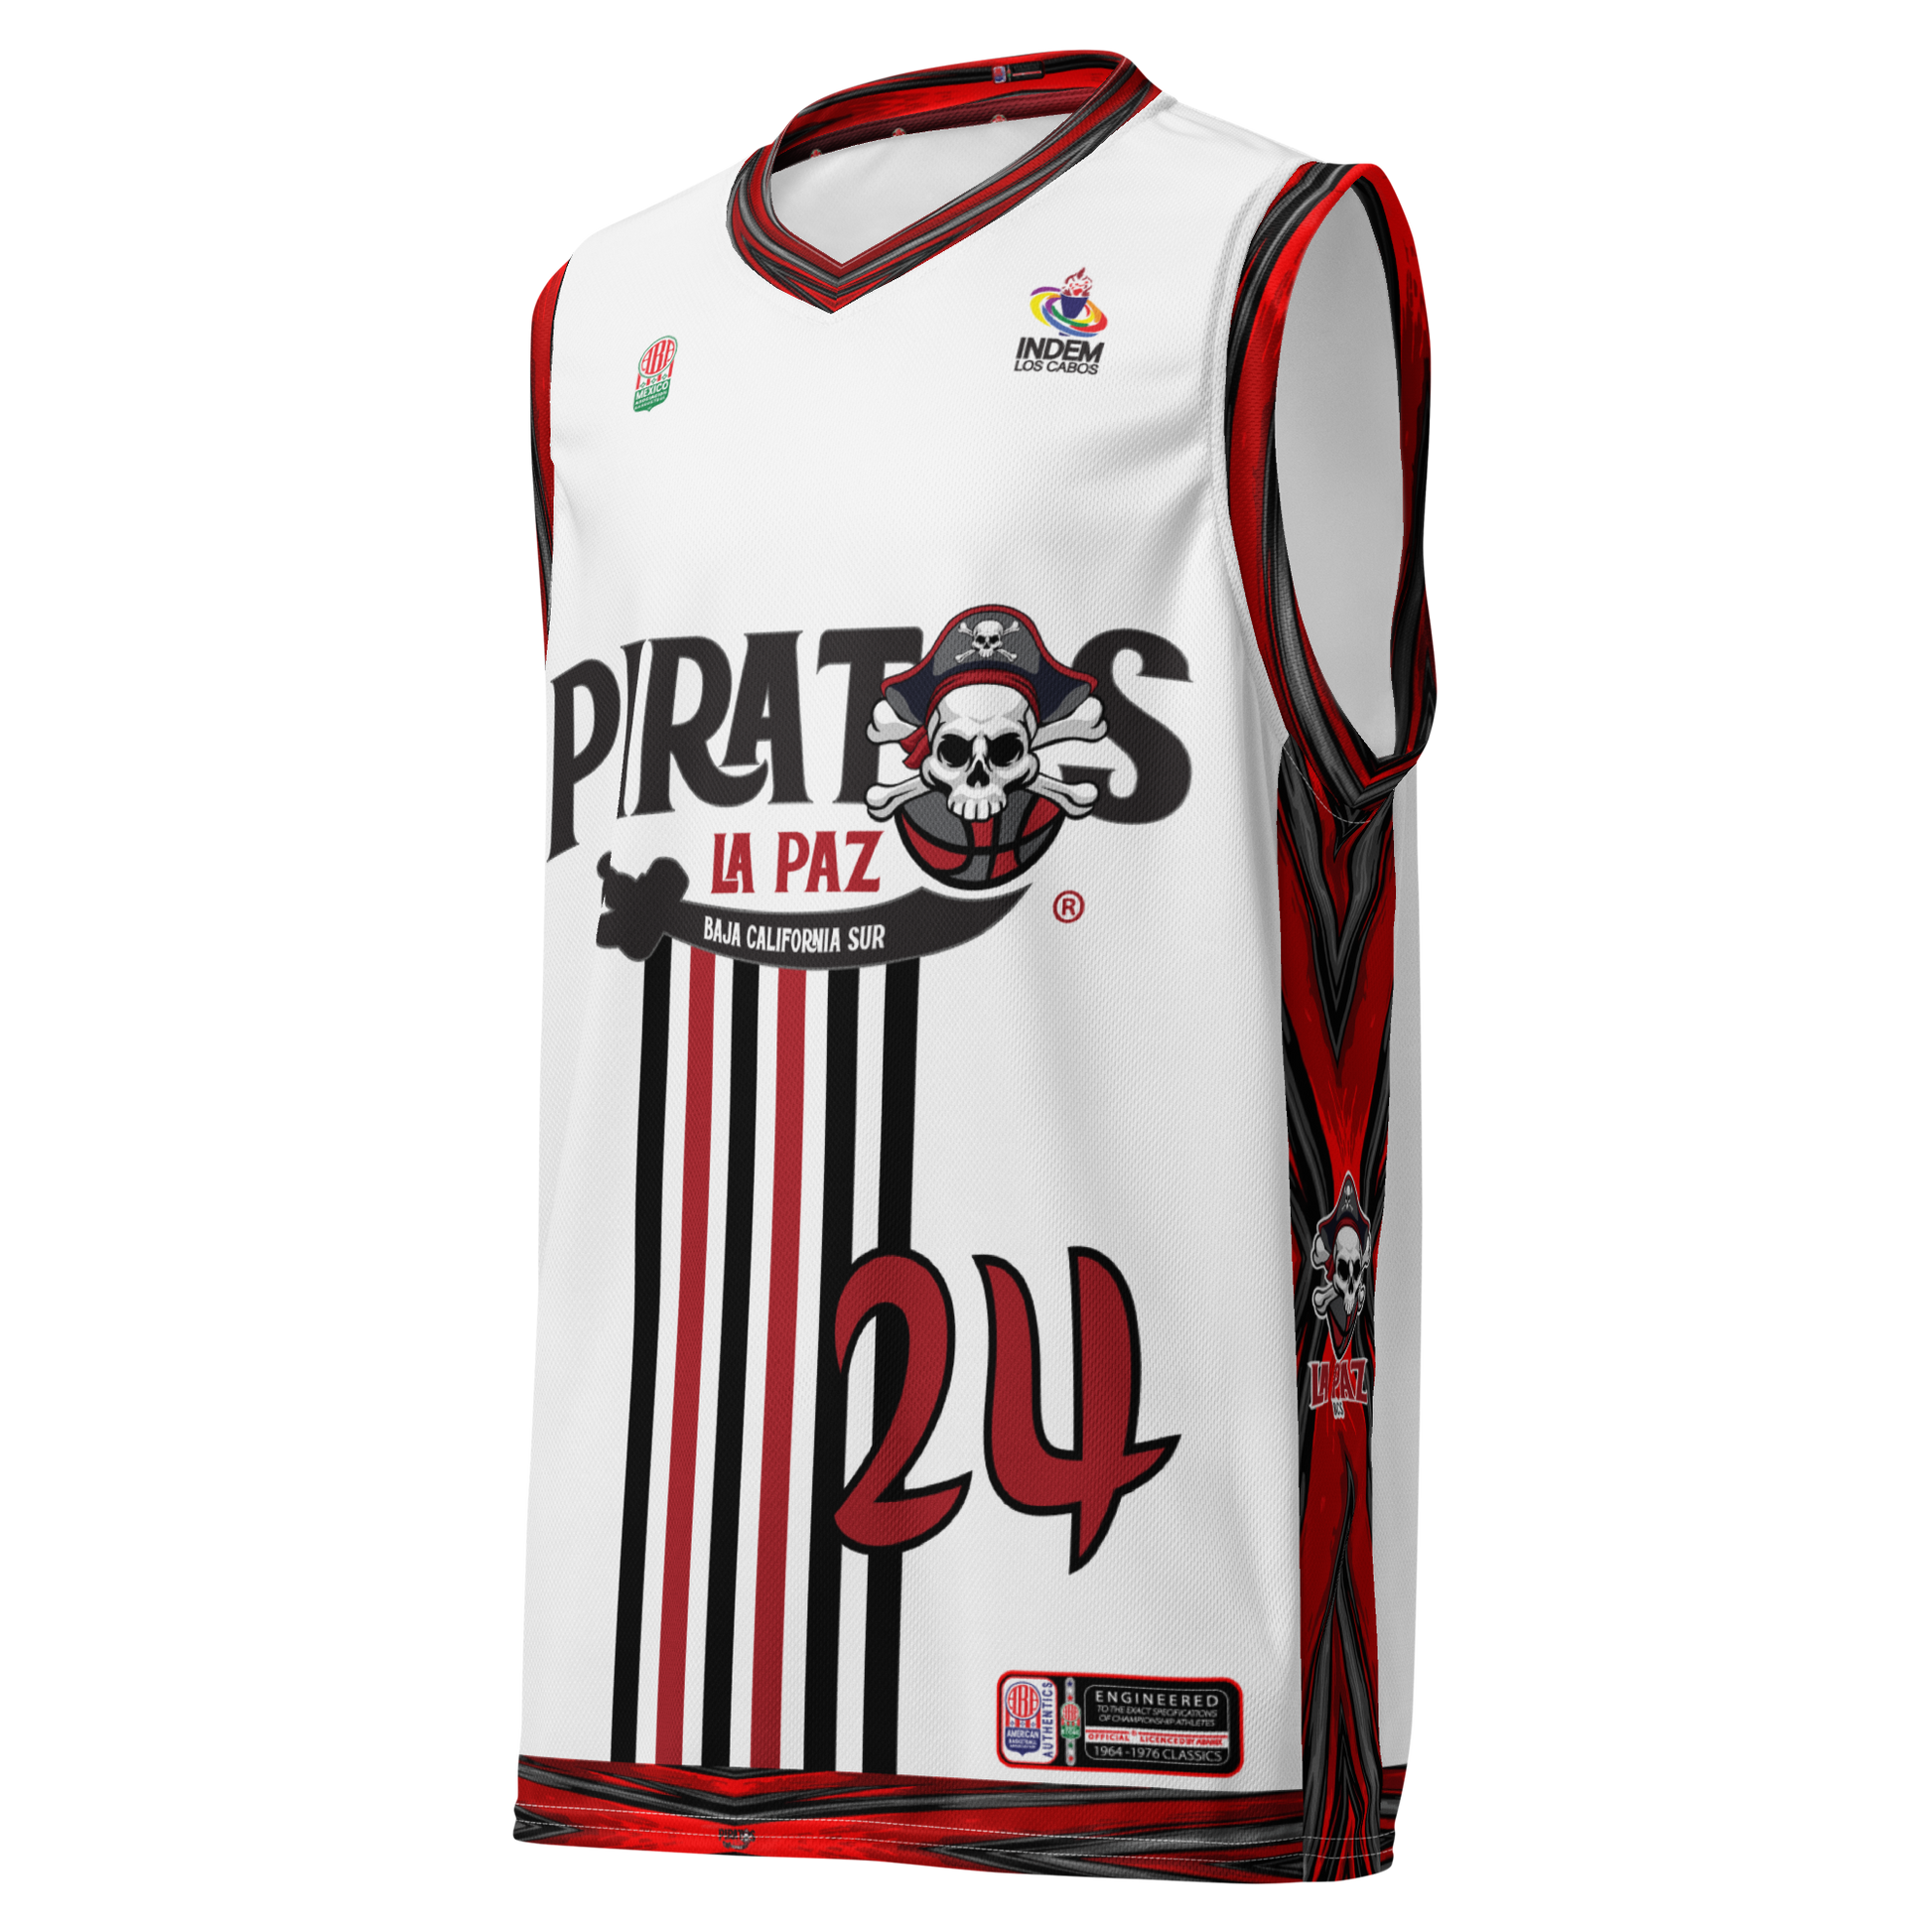 abamx Store The La Paz Piratas Basketball Team's White Home Jersey XL